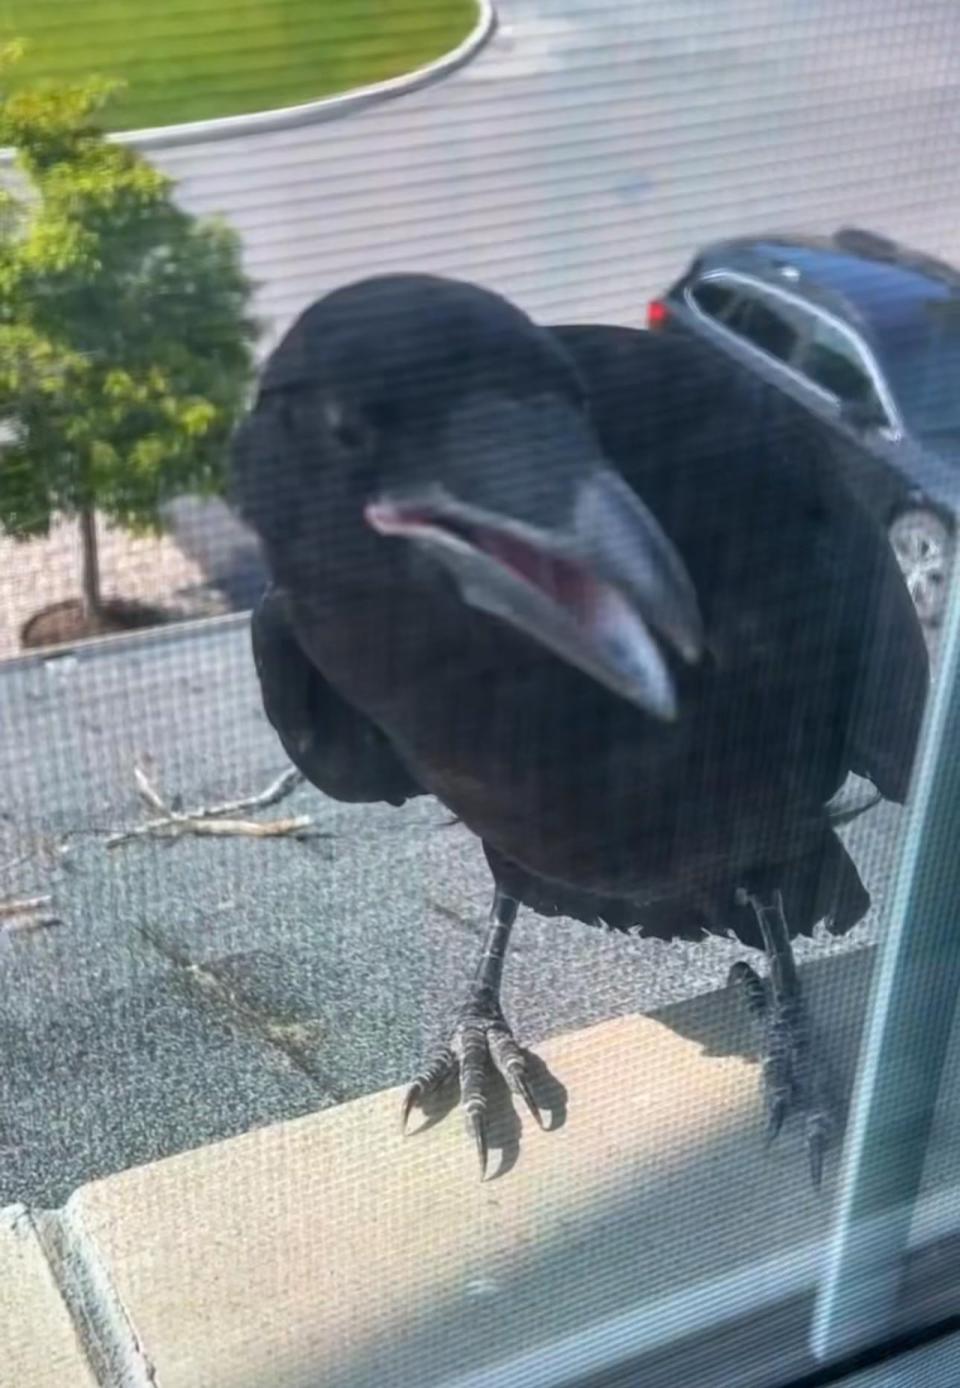 A juvenile raven knocked his beak against an upstairs window in Sadiq Zaman's home